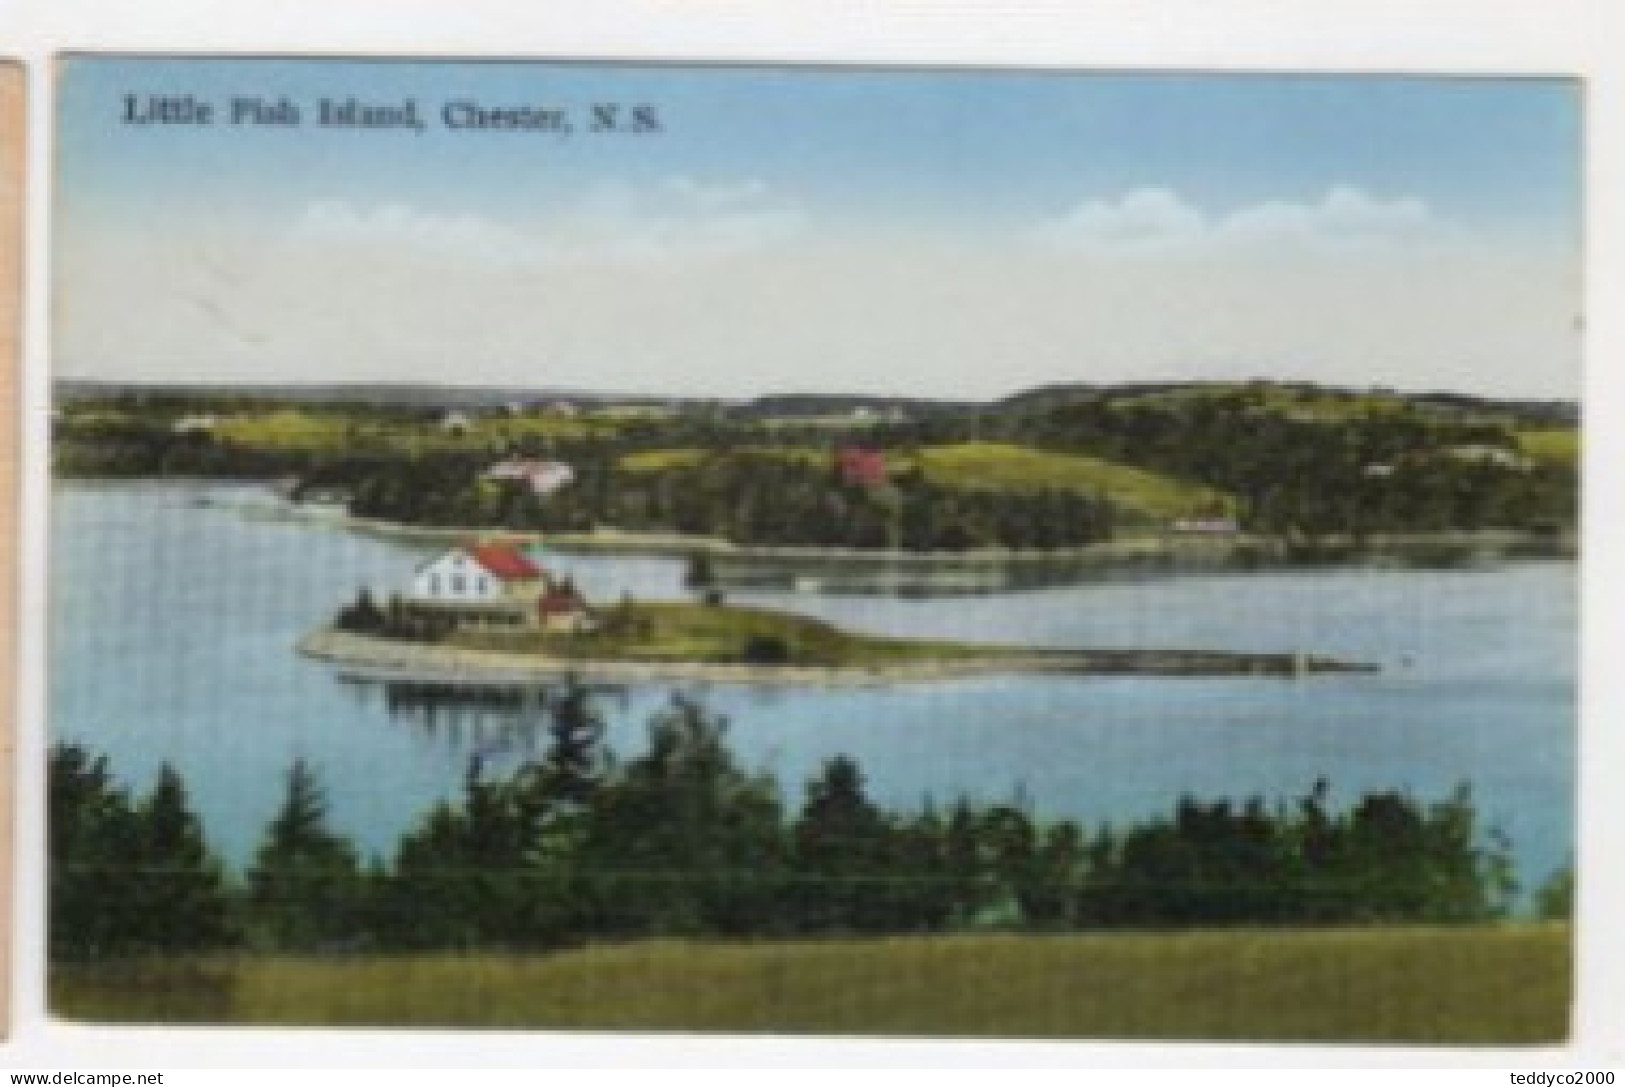 CHESTER Little Fish Island - Halifax